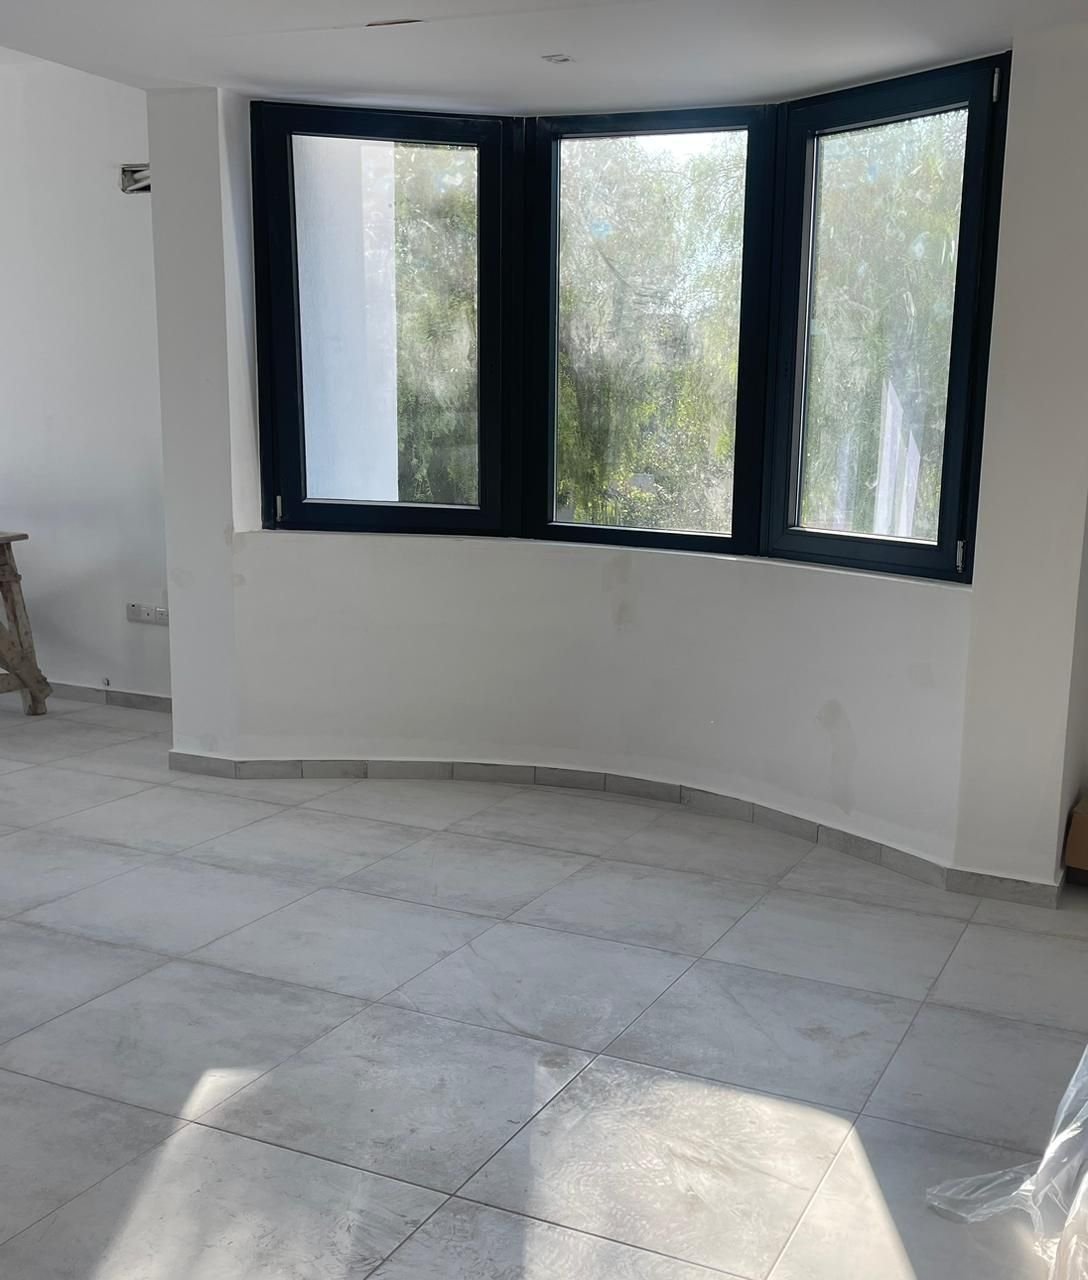 4 Bedroom Villa for Sale in Geroskipou, Paphos District